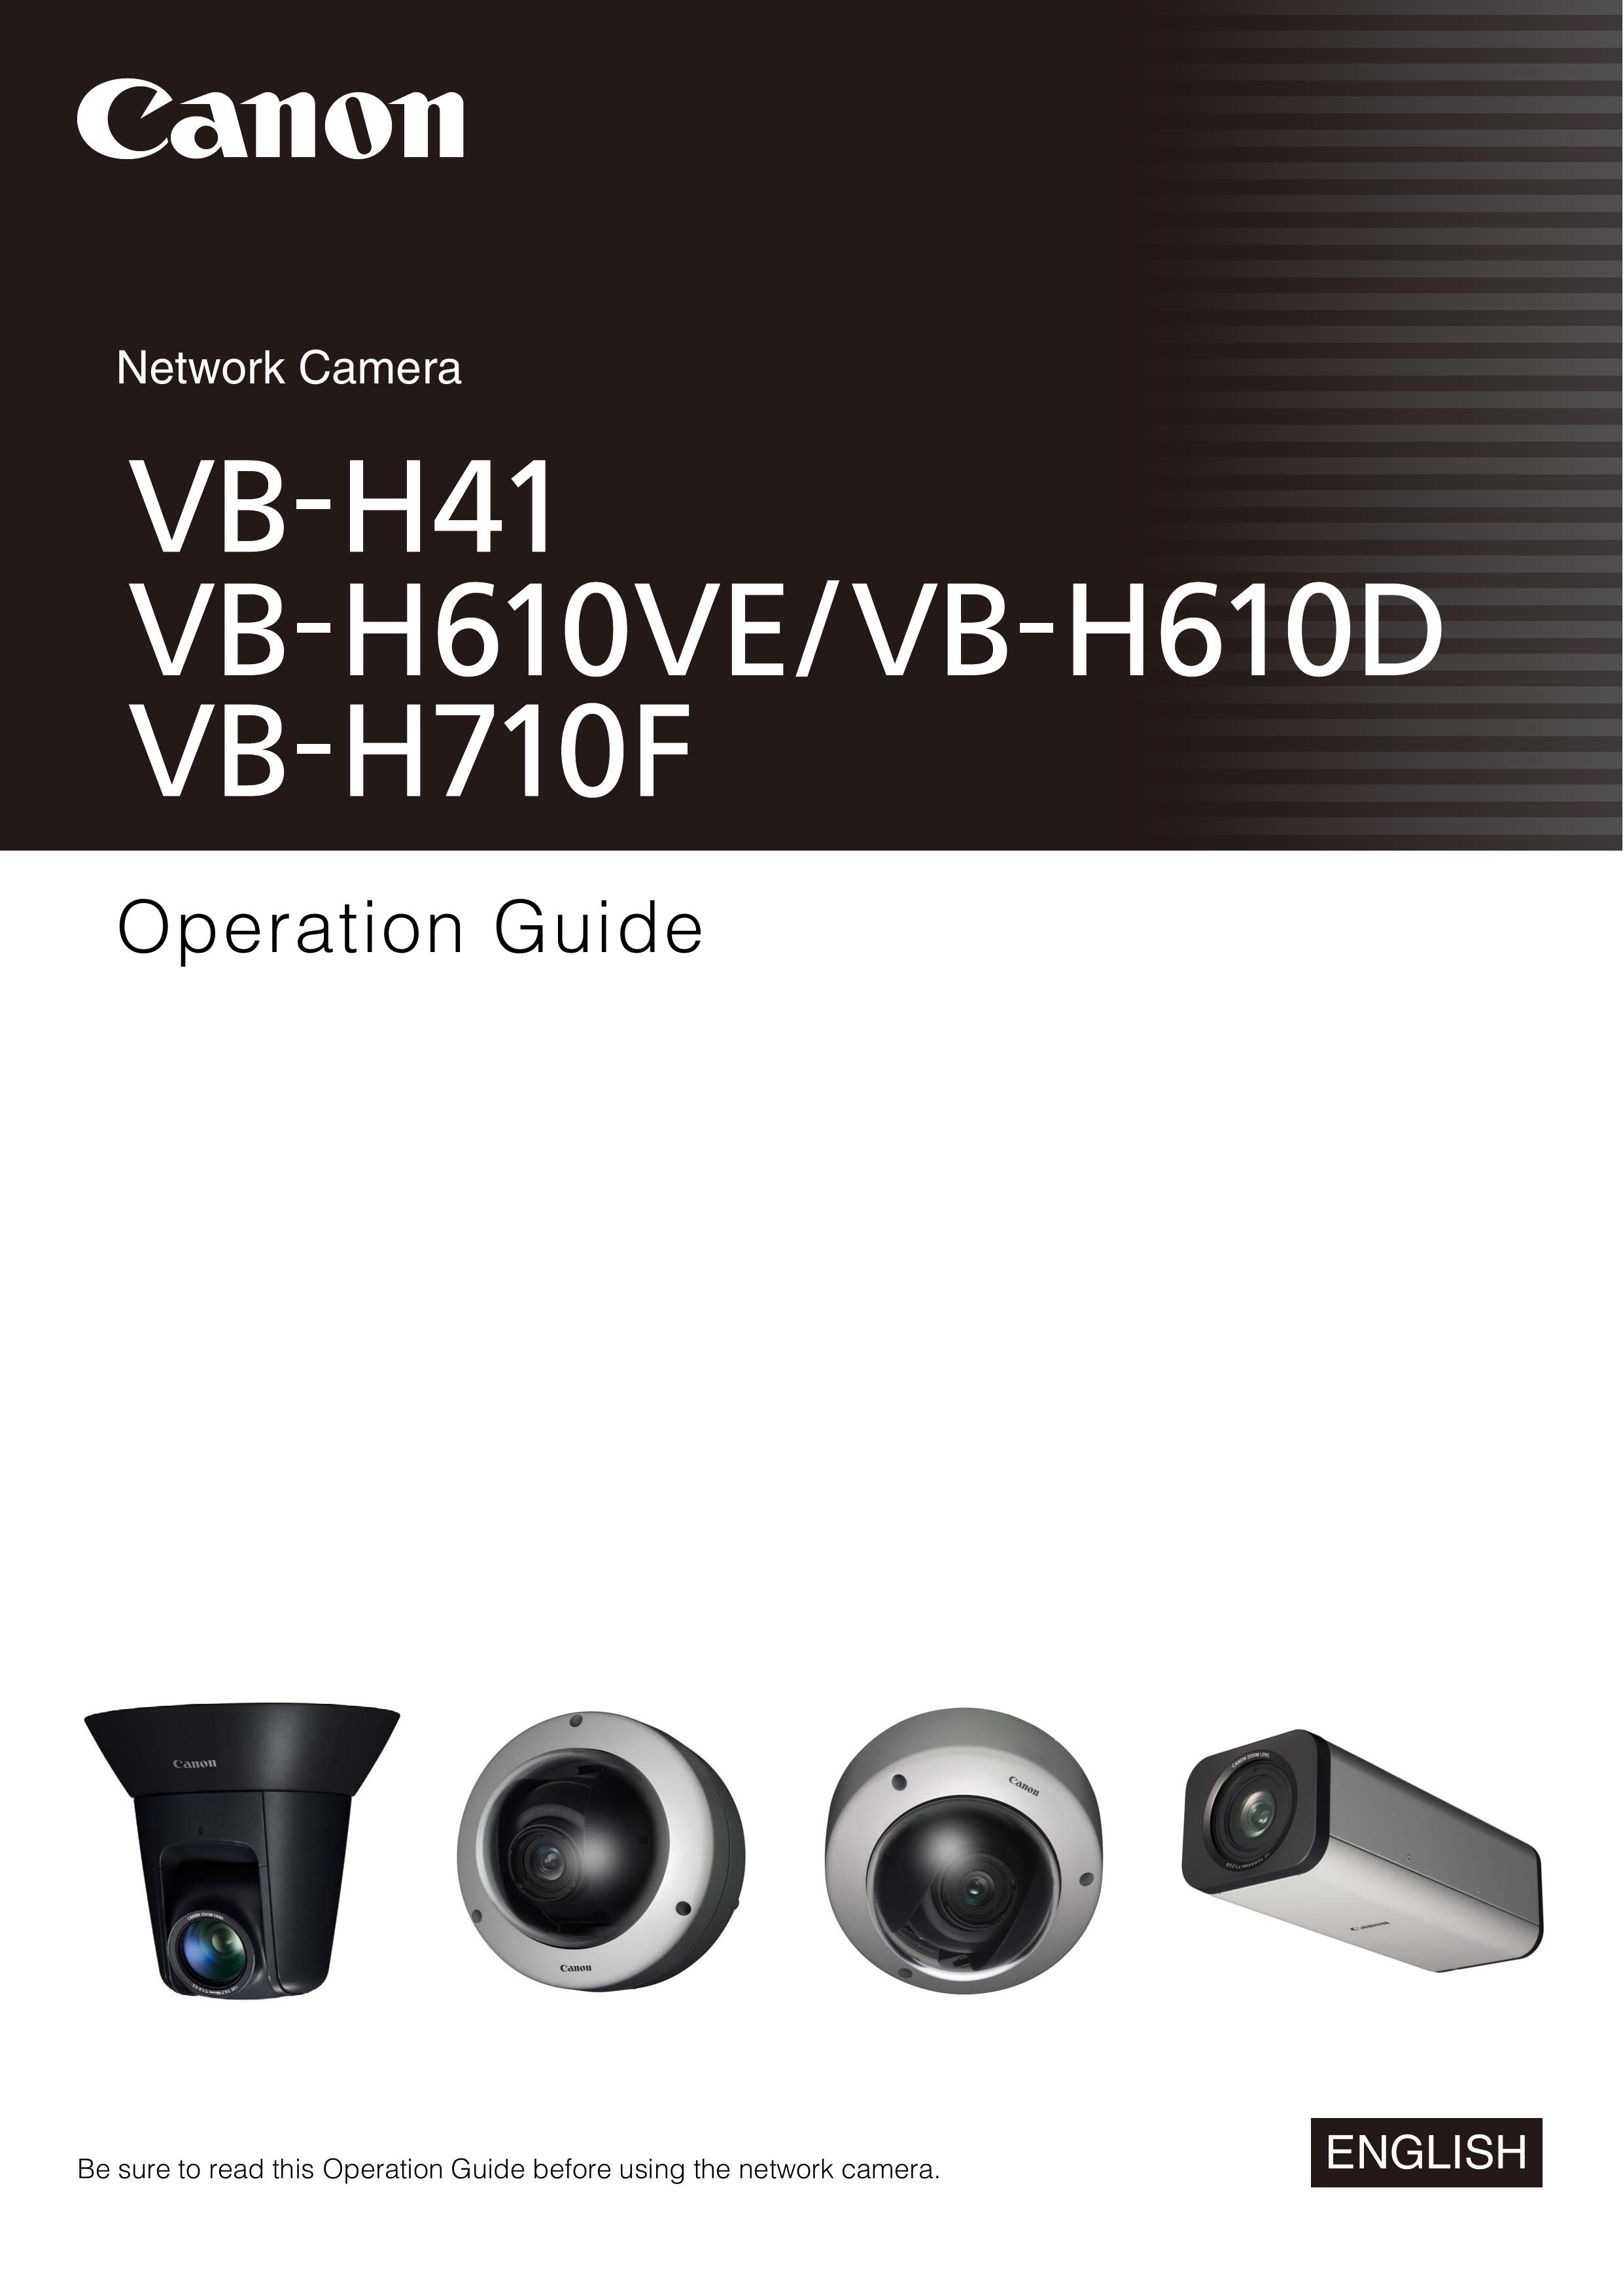 Canon VB-H41B Security Camera User Manual